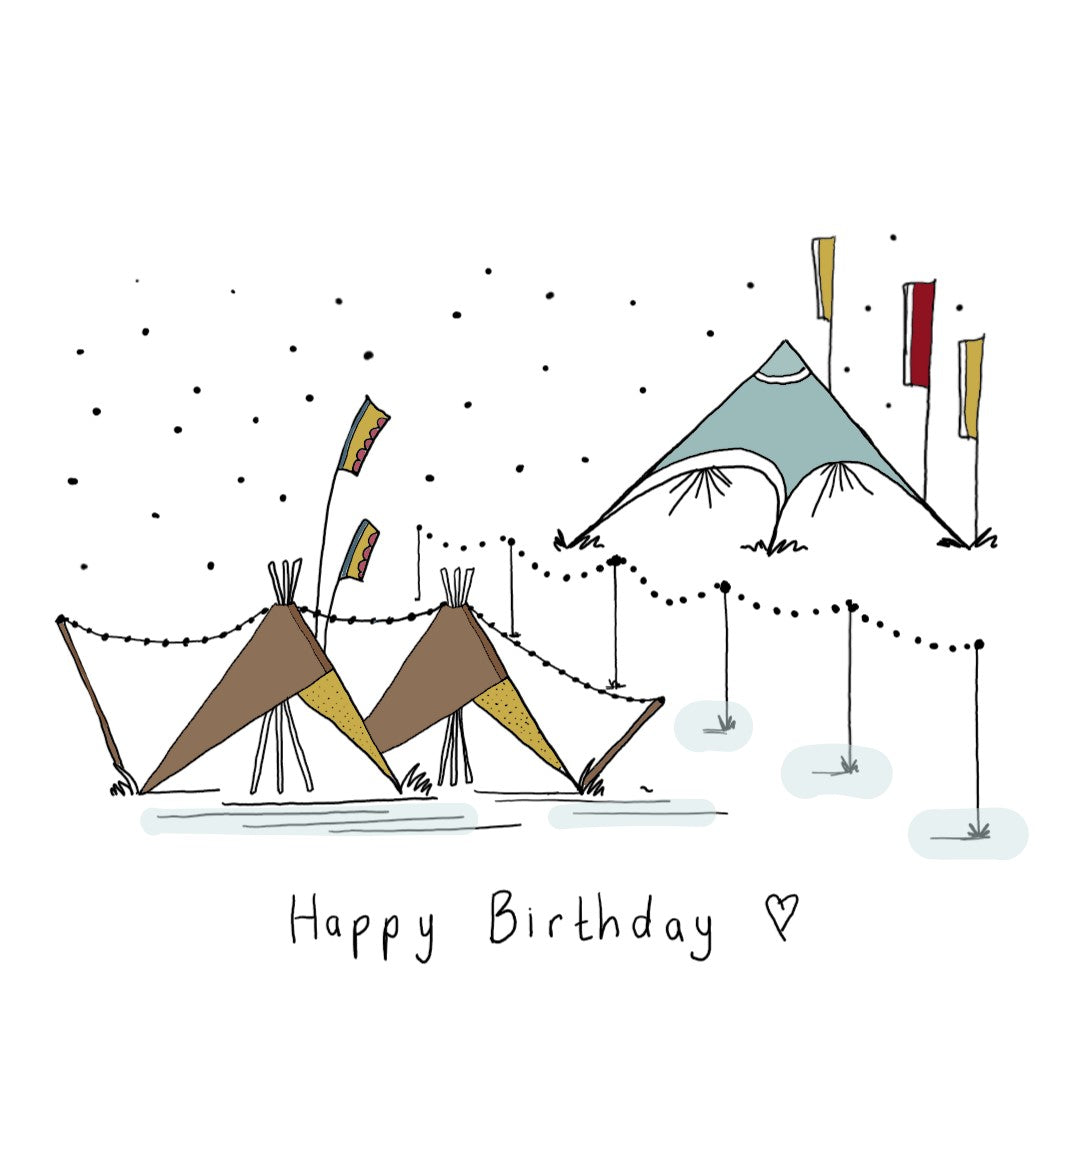 Happy Birthday - festival inspired greeting card 